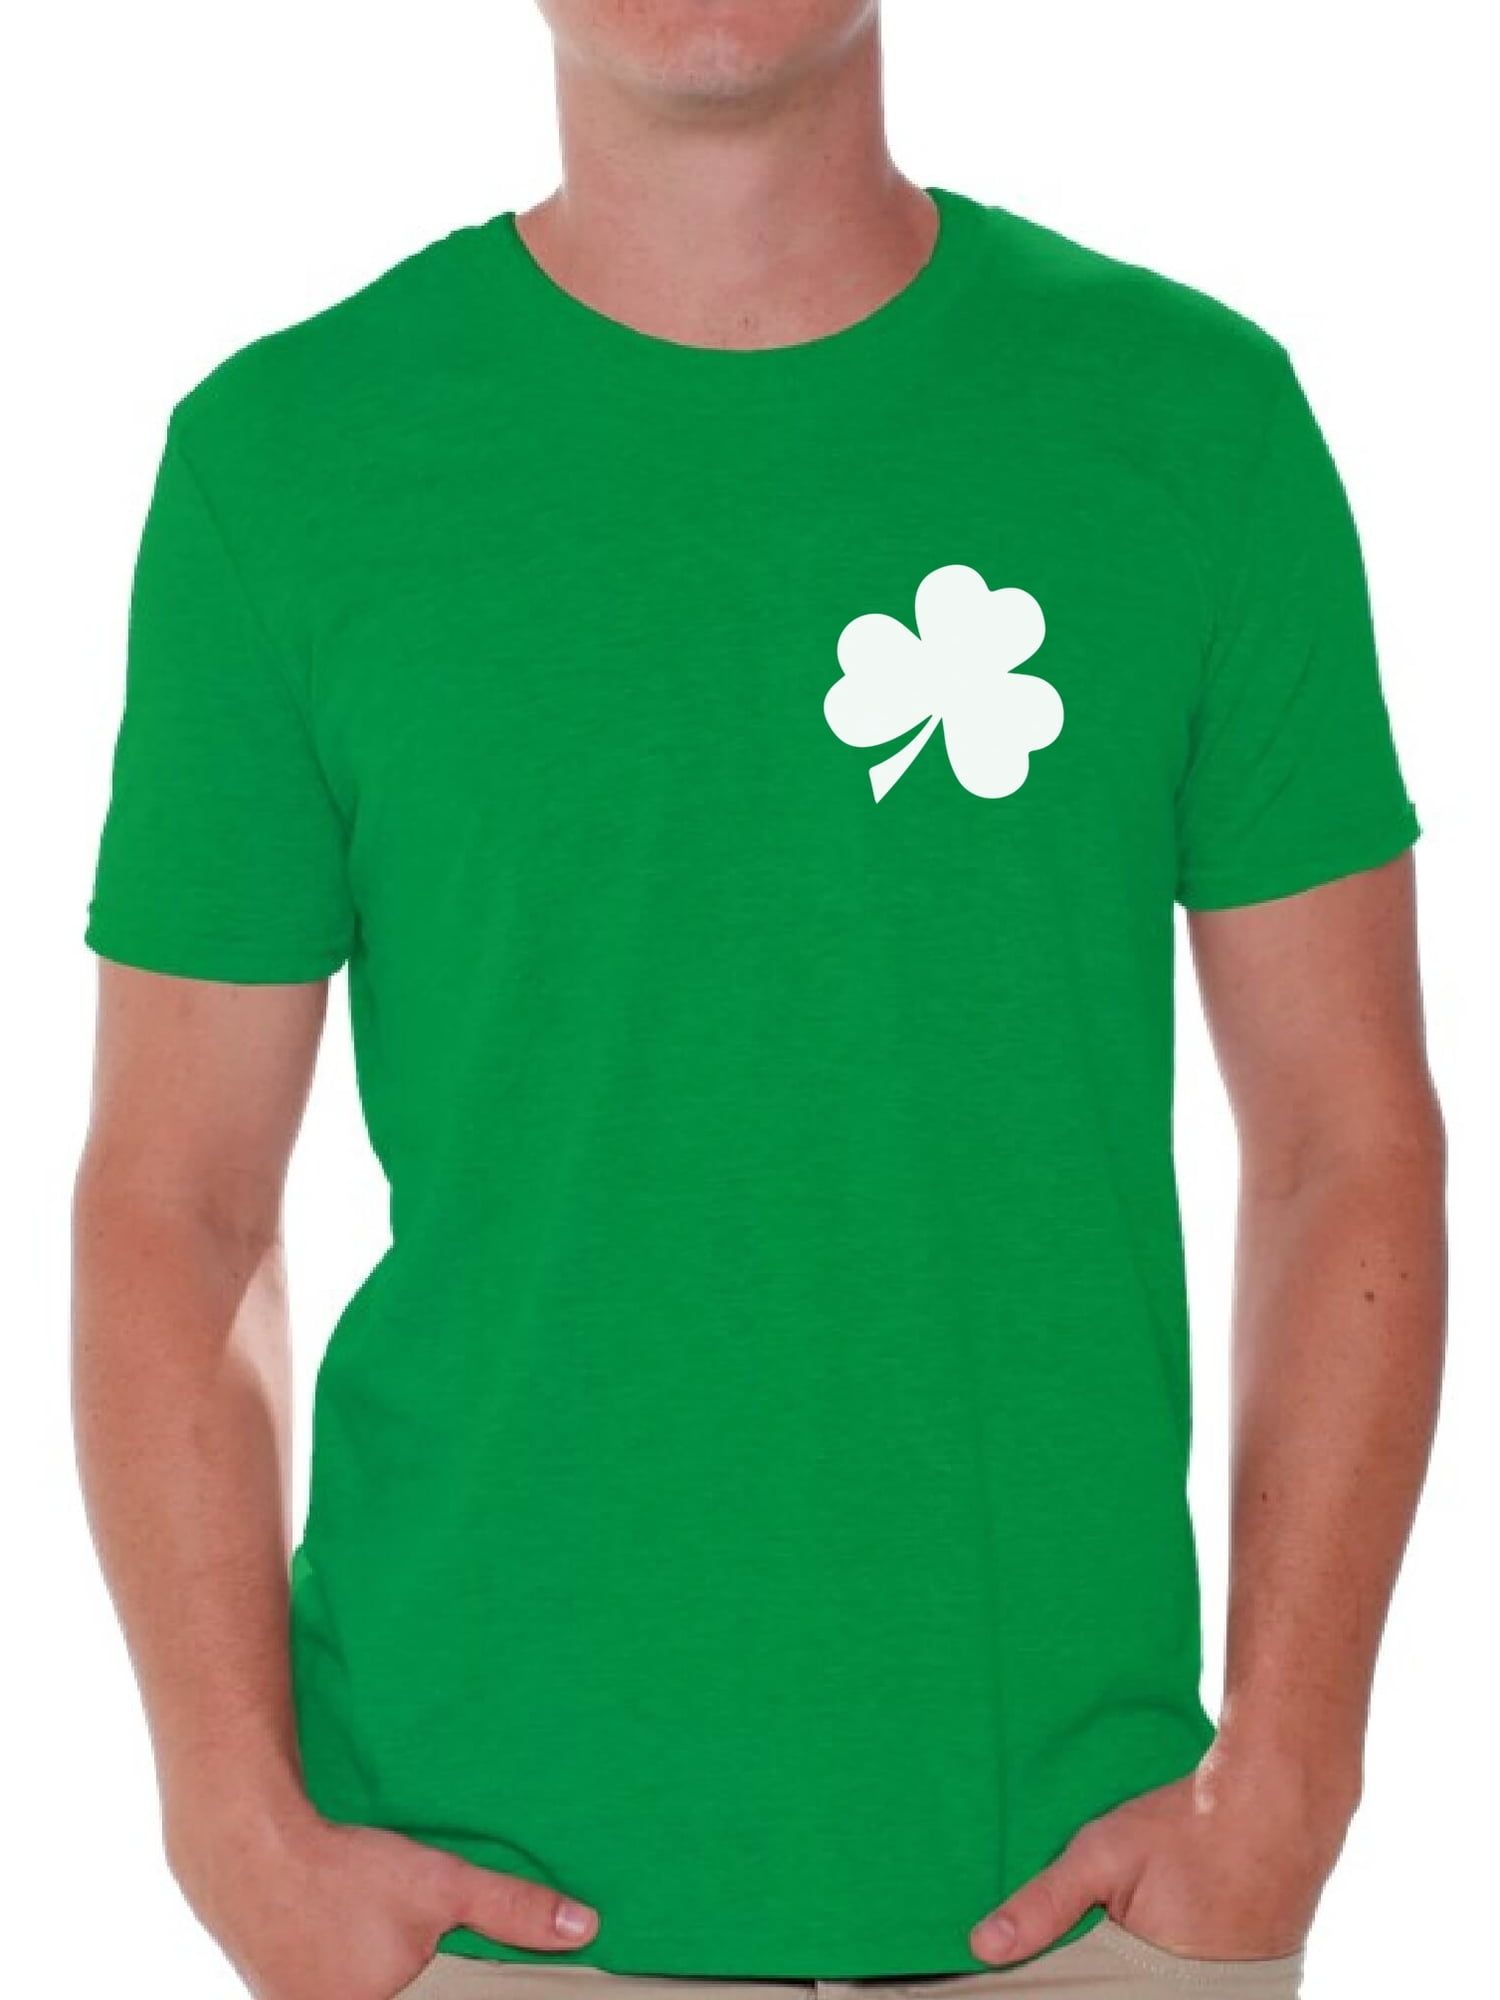 ZCFZJW Mens St. Patrick's Day Green Shirts Funny Printed Casual Button Down  Short Sleeve Shamrock Pattern Graphic Hawaiian T-Shirts Trendy Holiday Gift  Tees Shirt Tops Green#01 9.89 